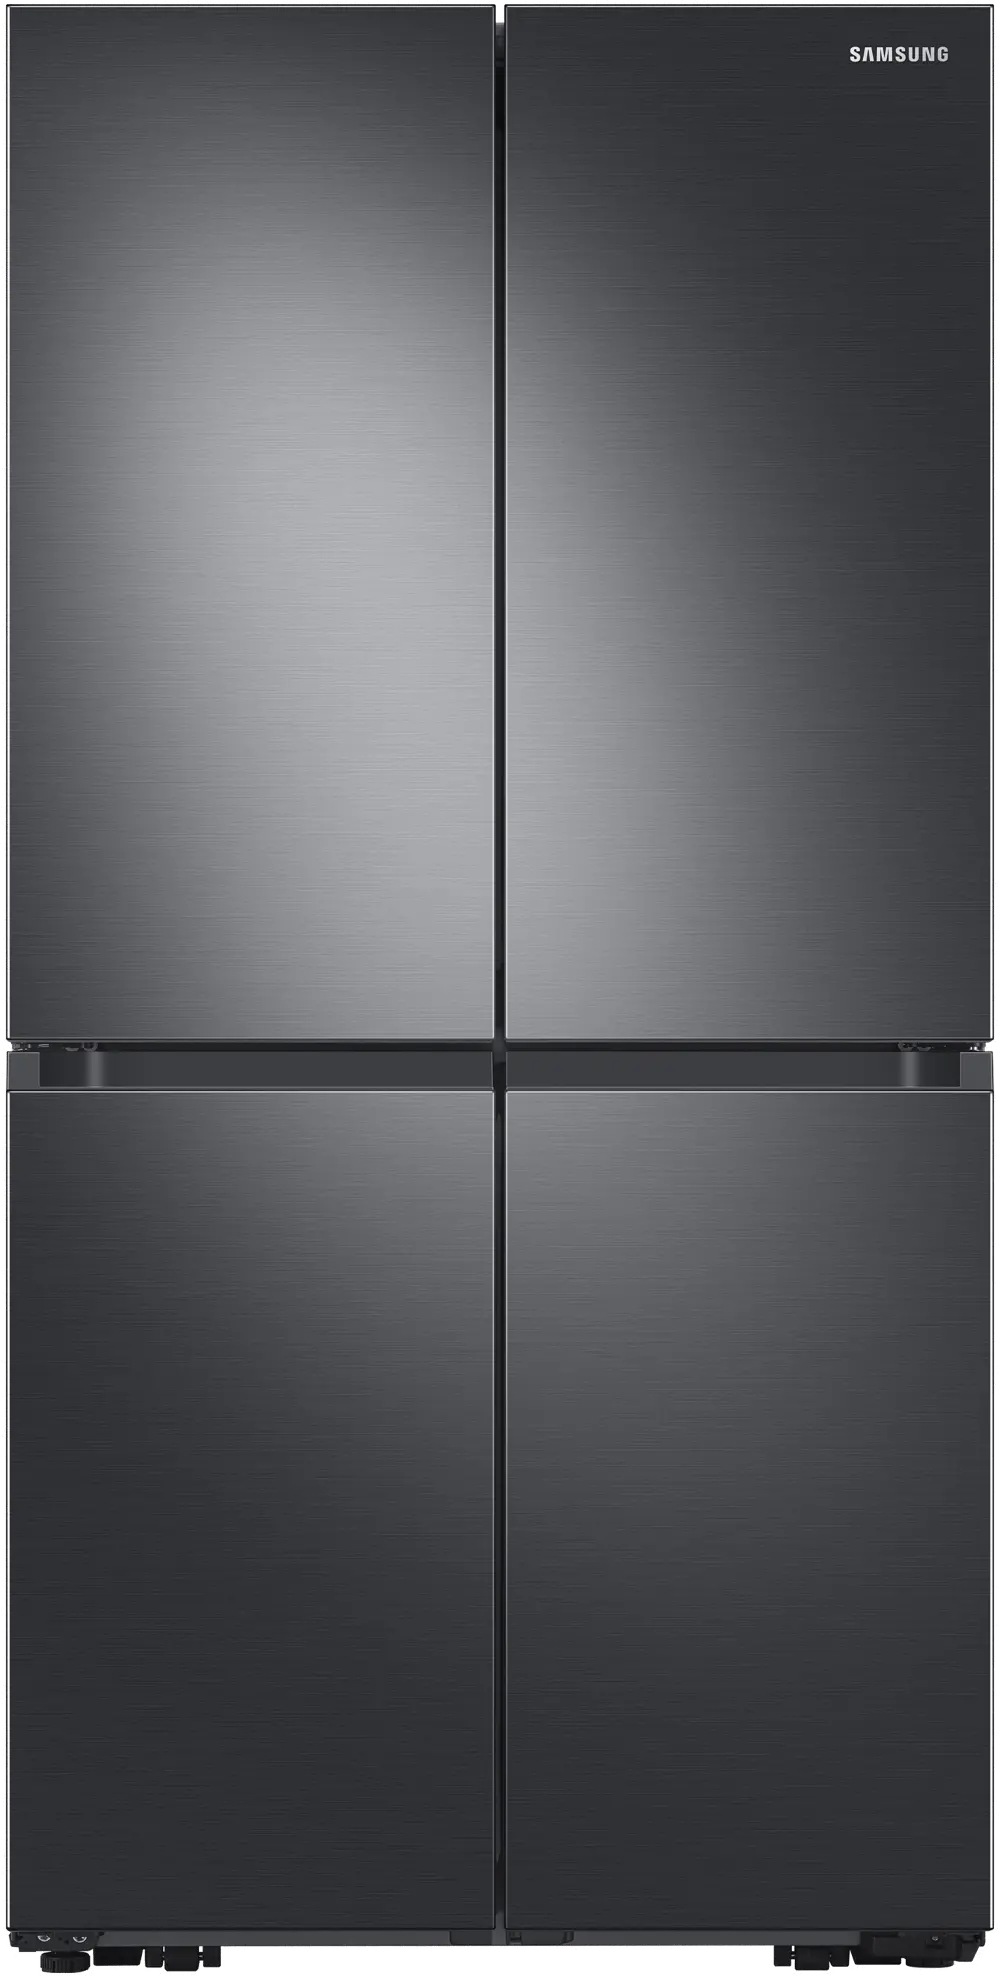 RF23A9671SG Samsung 22.8 cu ft 4 Door Refrigerator - Counter Depth Black Stainless Steel-1